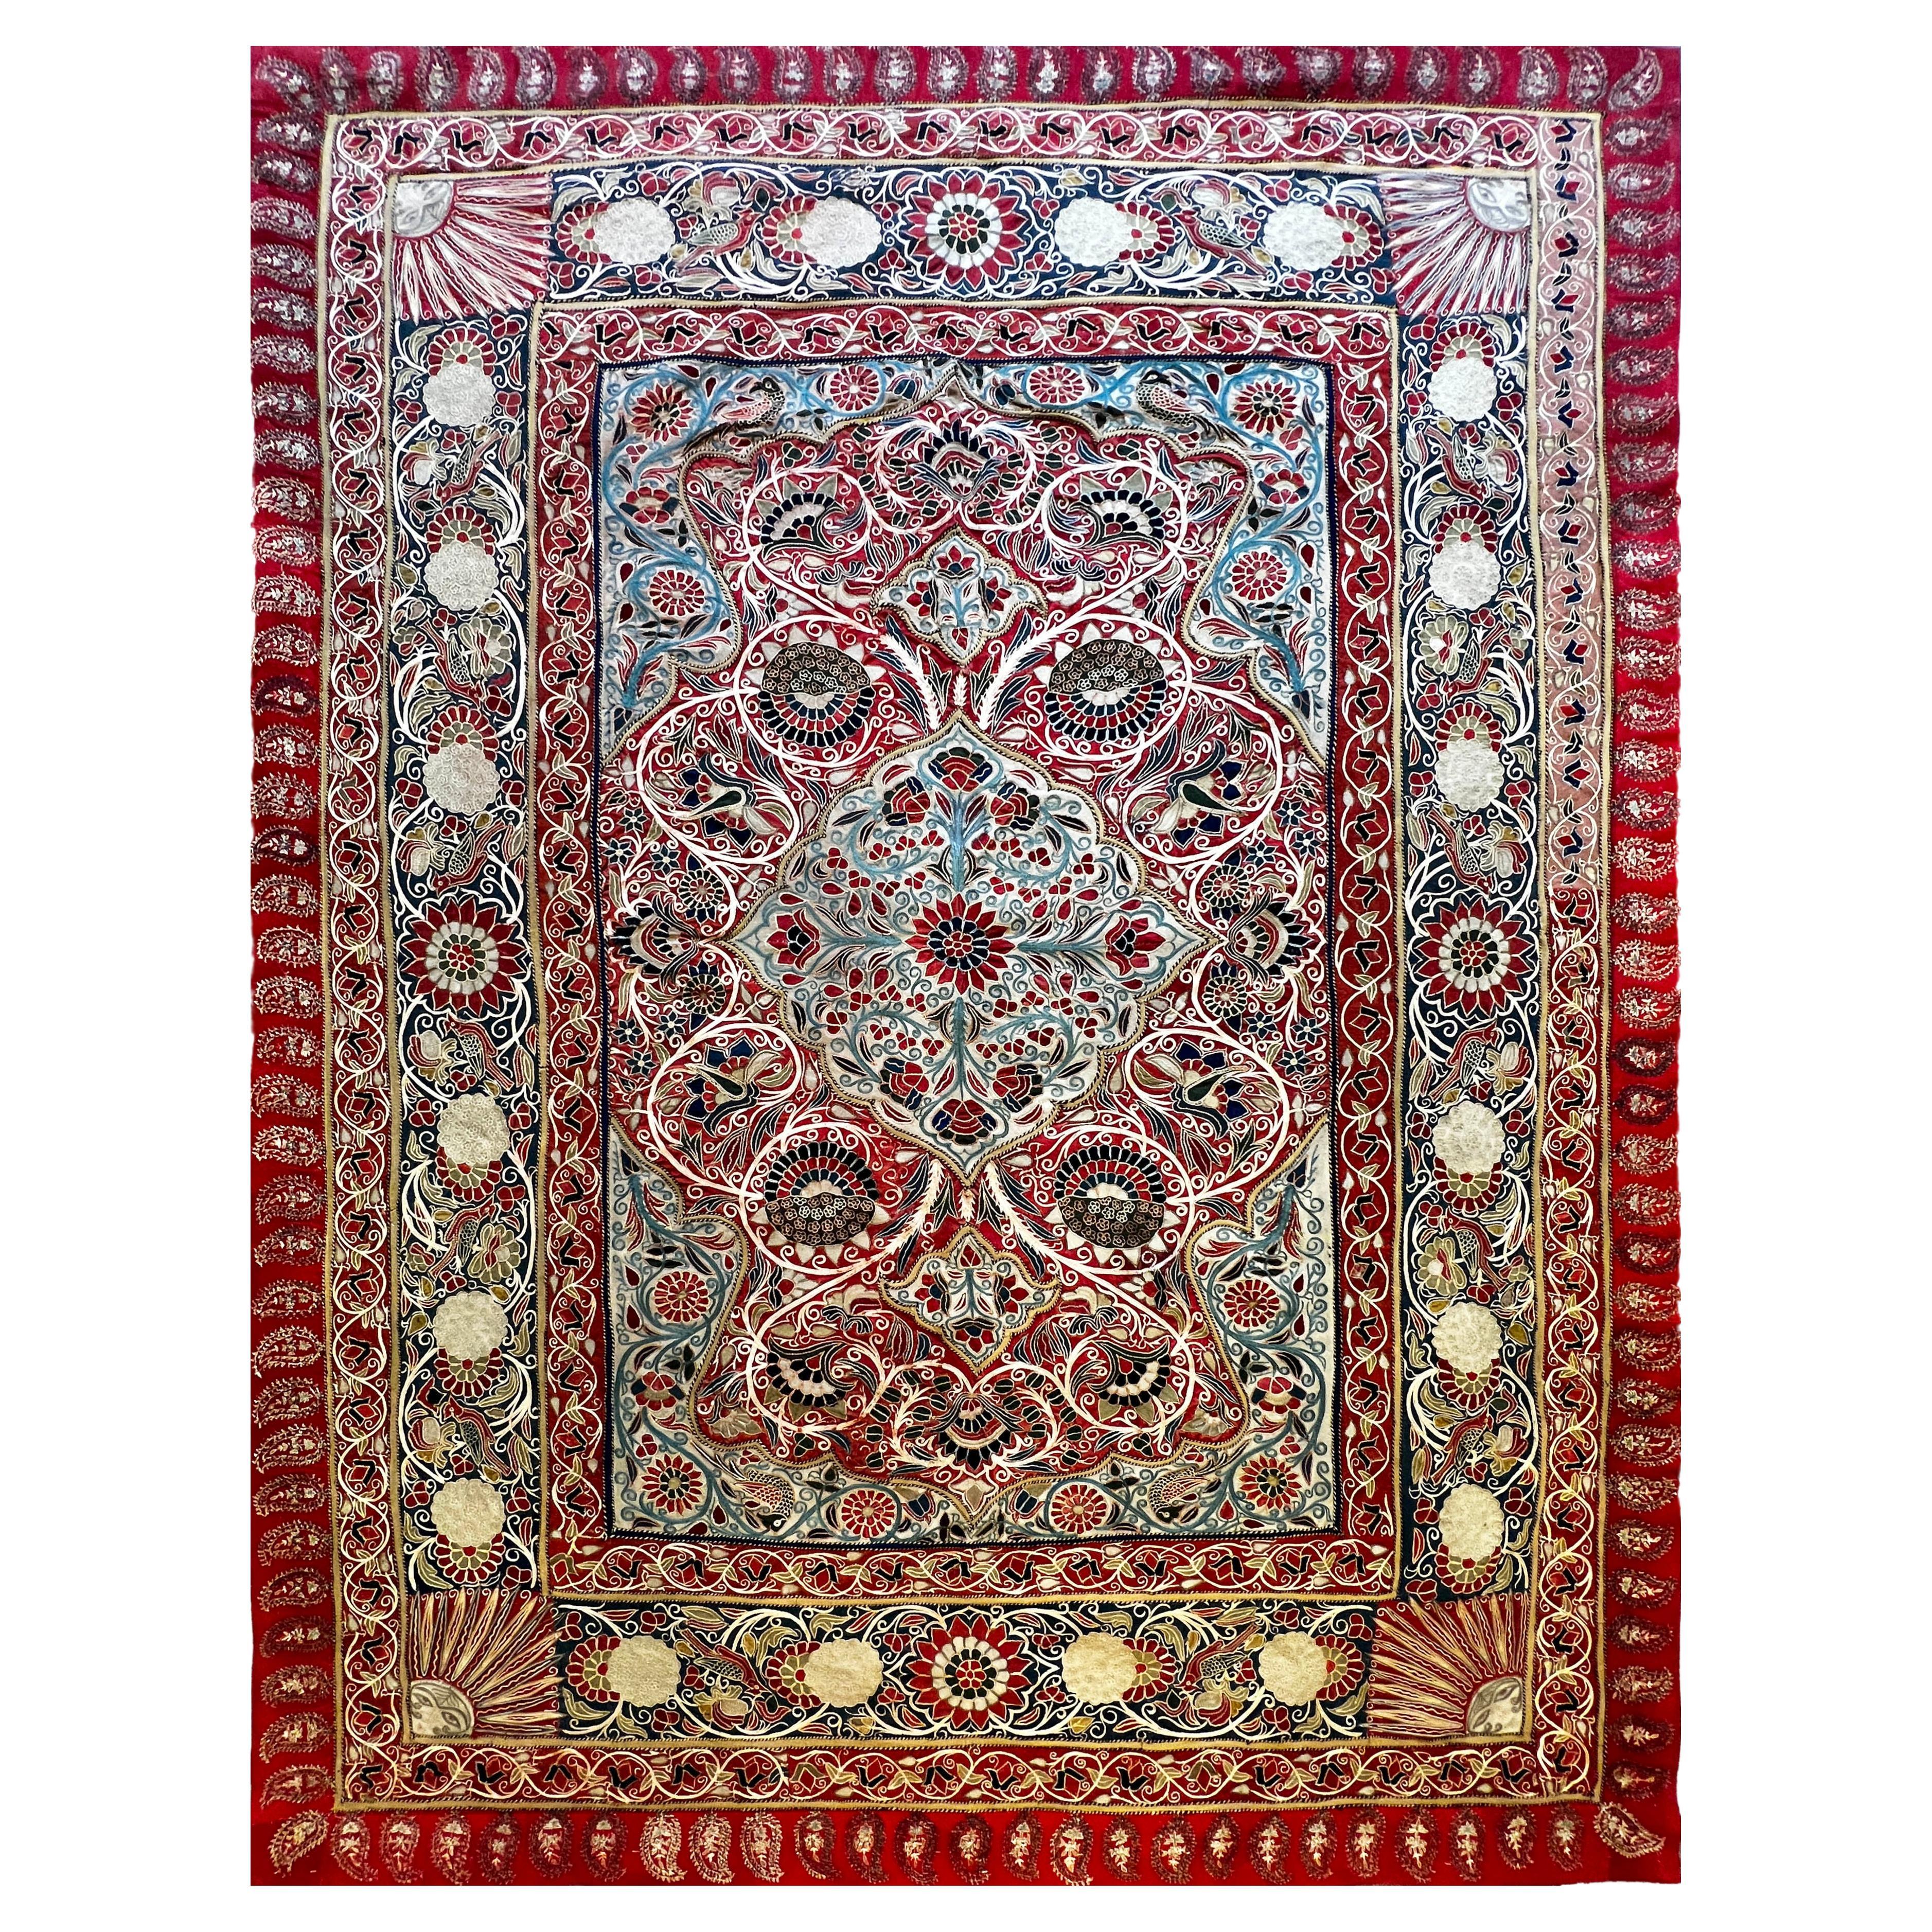 Tissu décoratif persan du 19e siècle  (RESHT) Rashtidouzi - N°1215 en vente